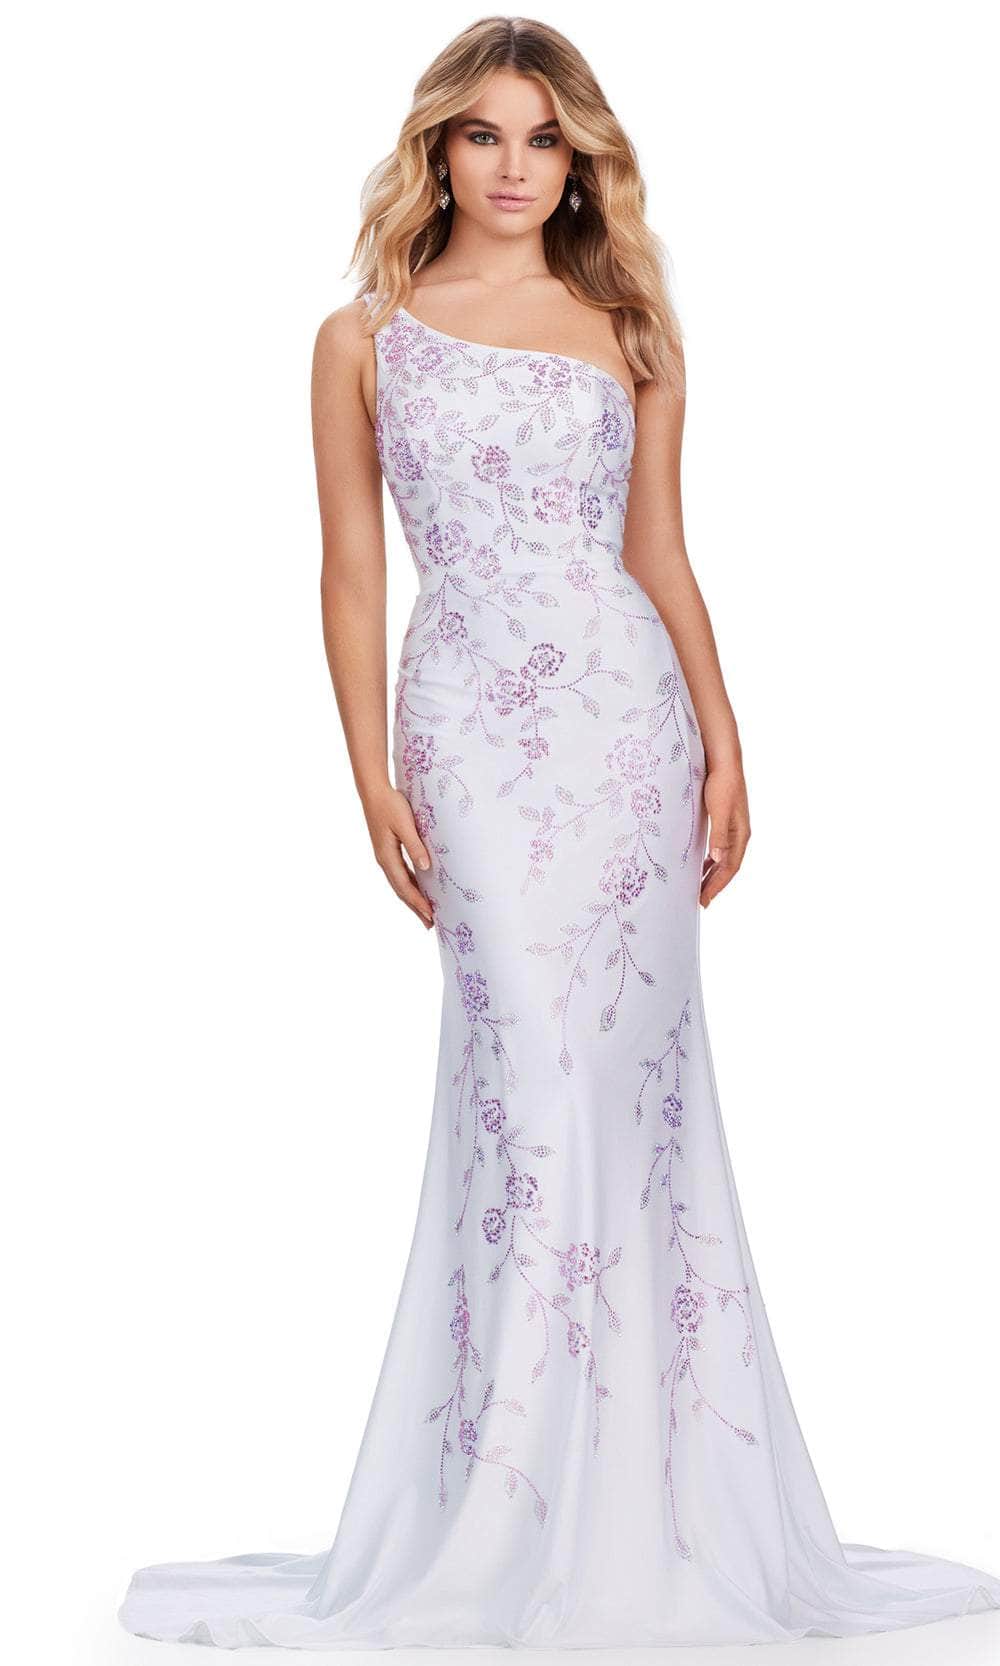 Ashley Lauren 11525 - Floral Bead Prom Dress Prom Dresses